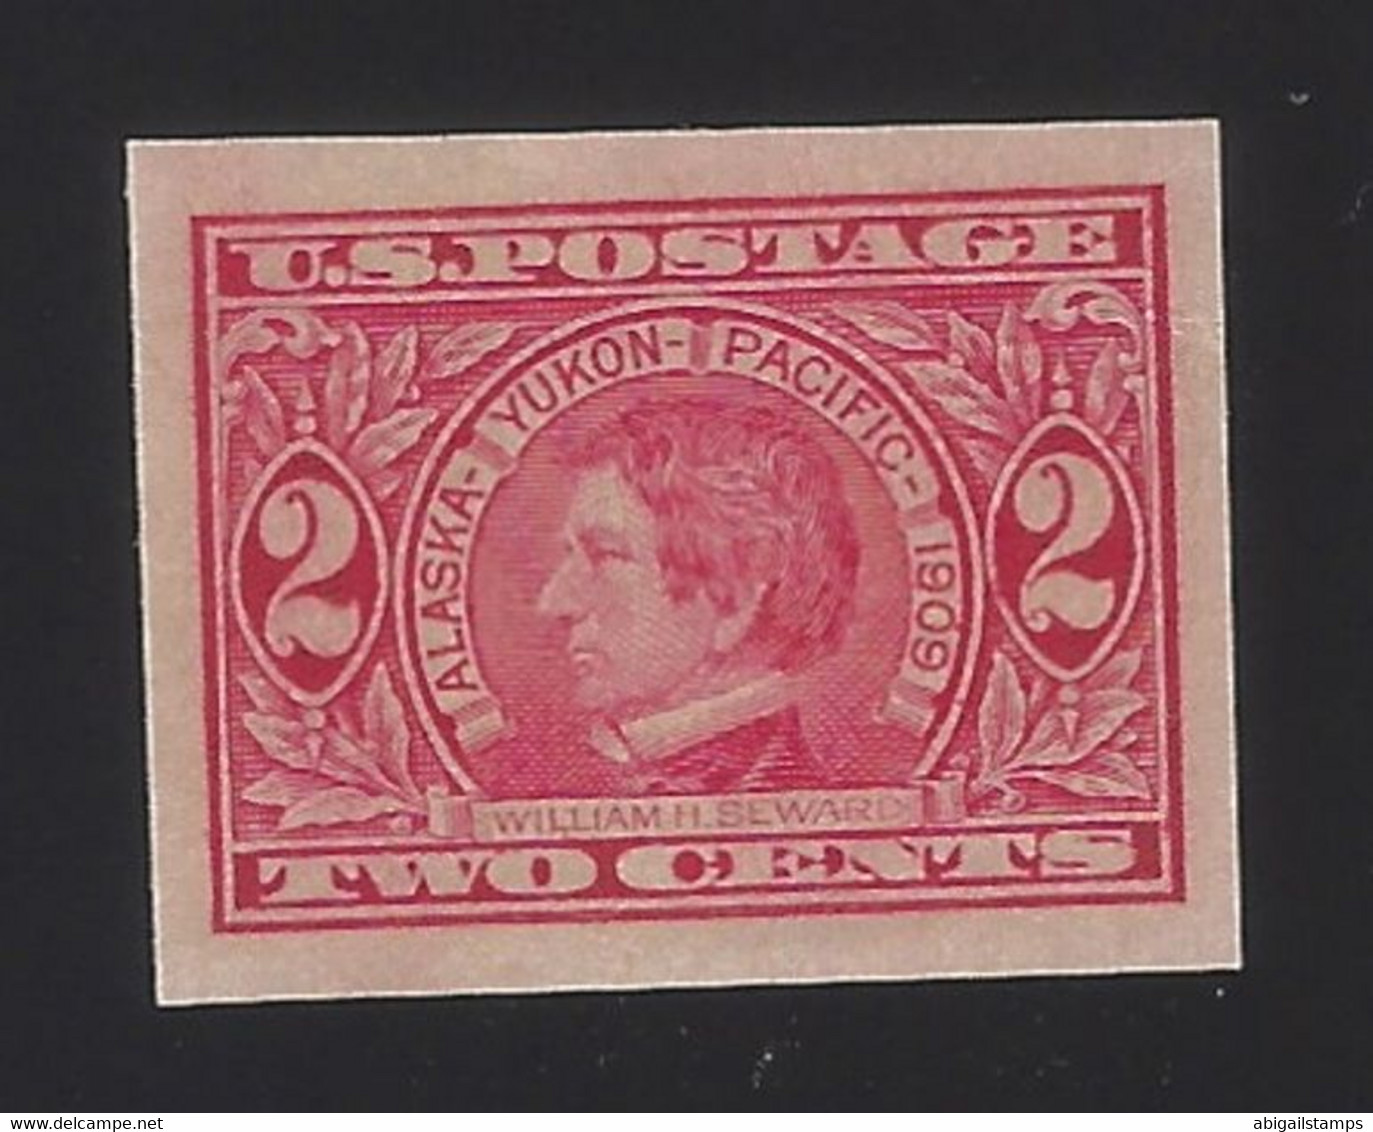 US #371 1909 Carmine Wmk 191 Imperf MNH VF Scv $35 - Unused Stamps